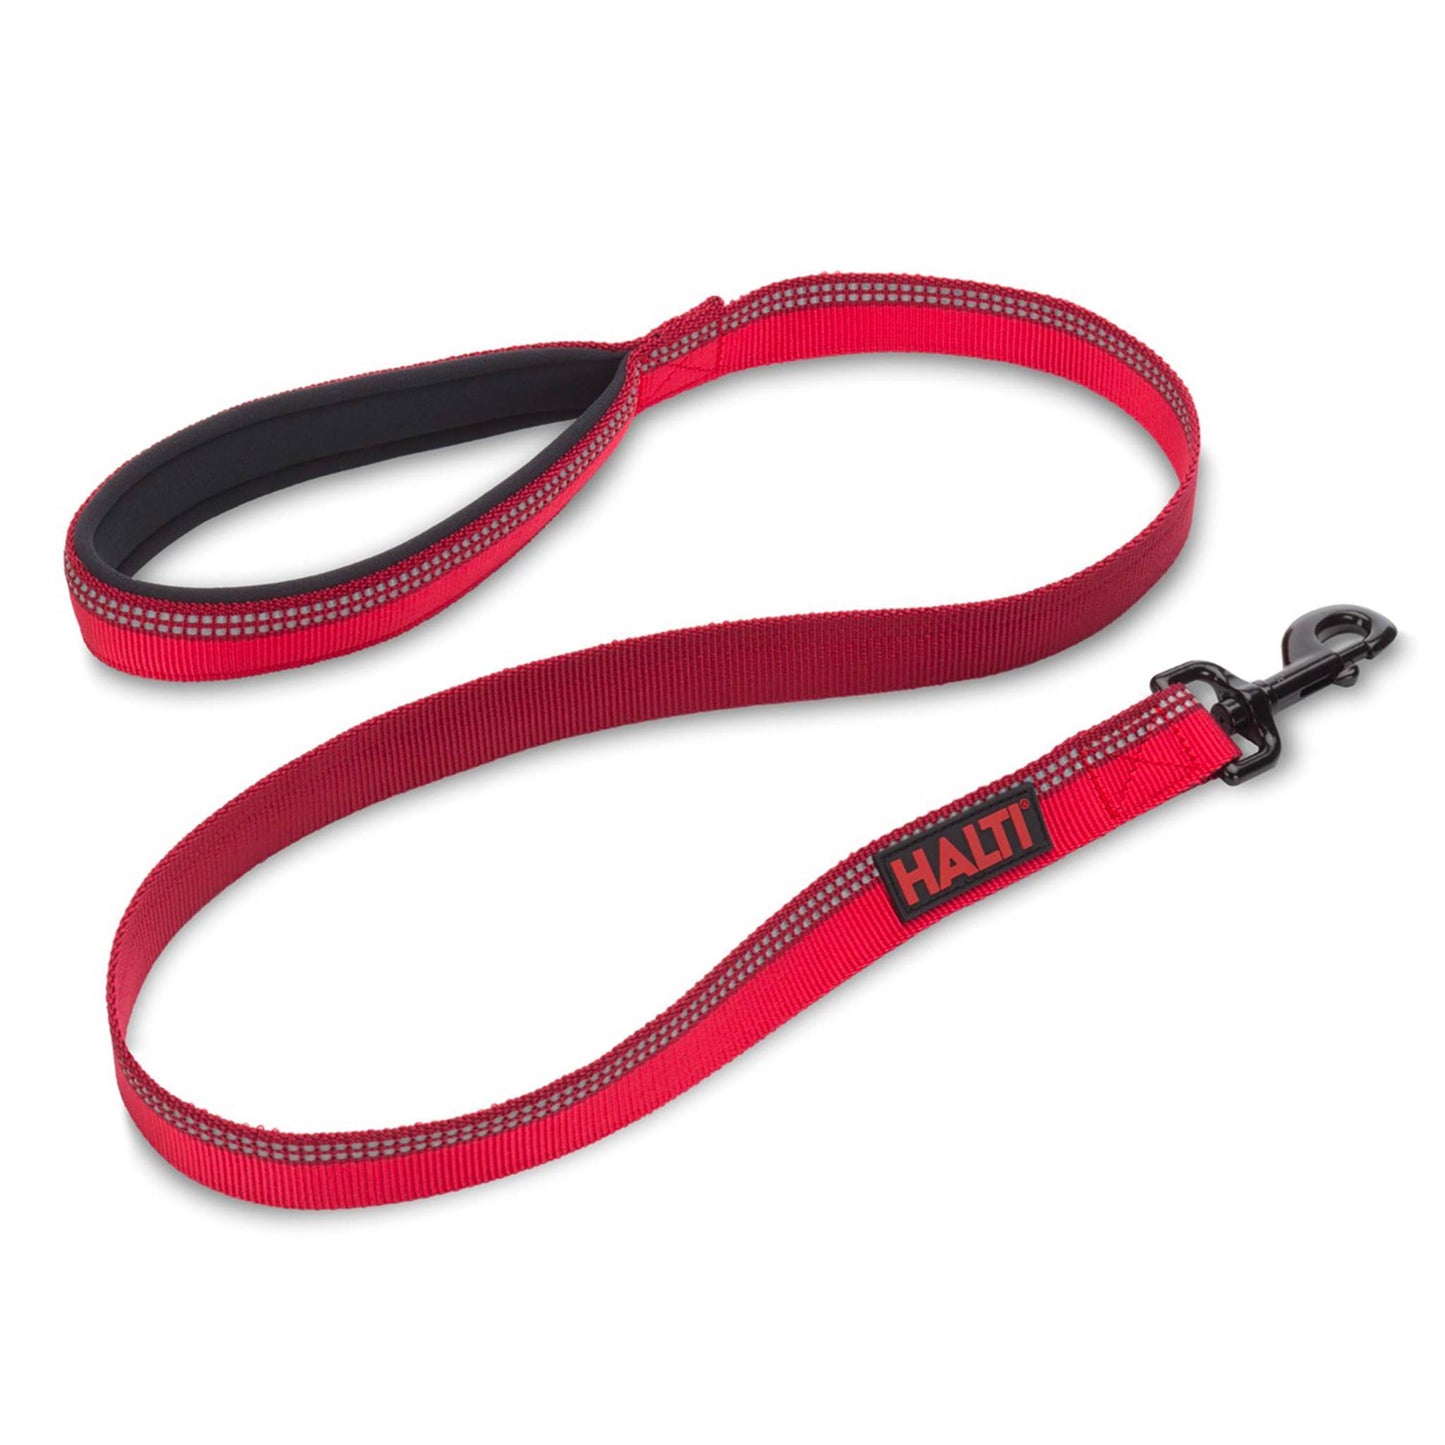 Halti dog lead in red